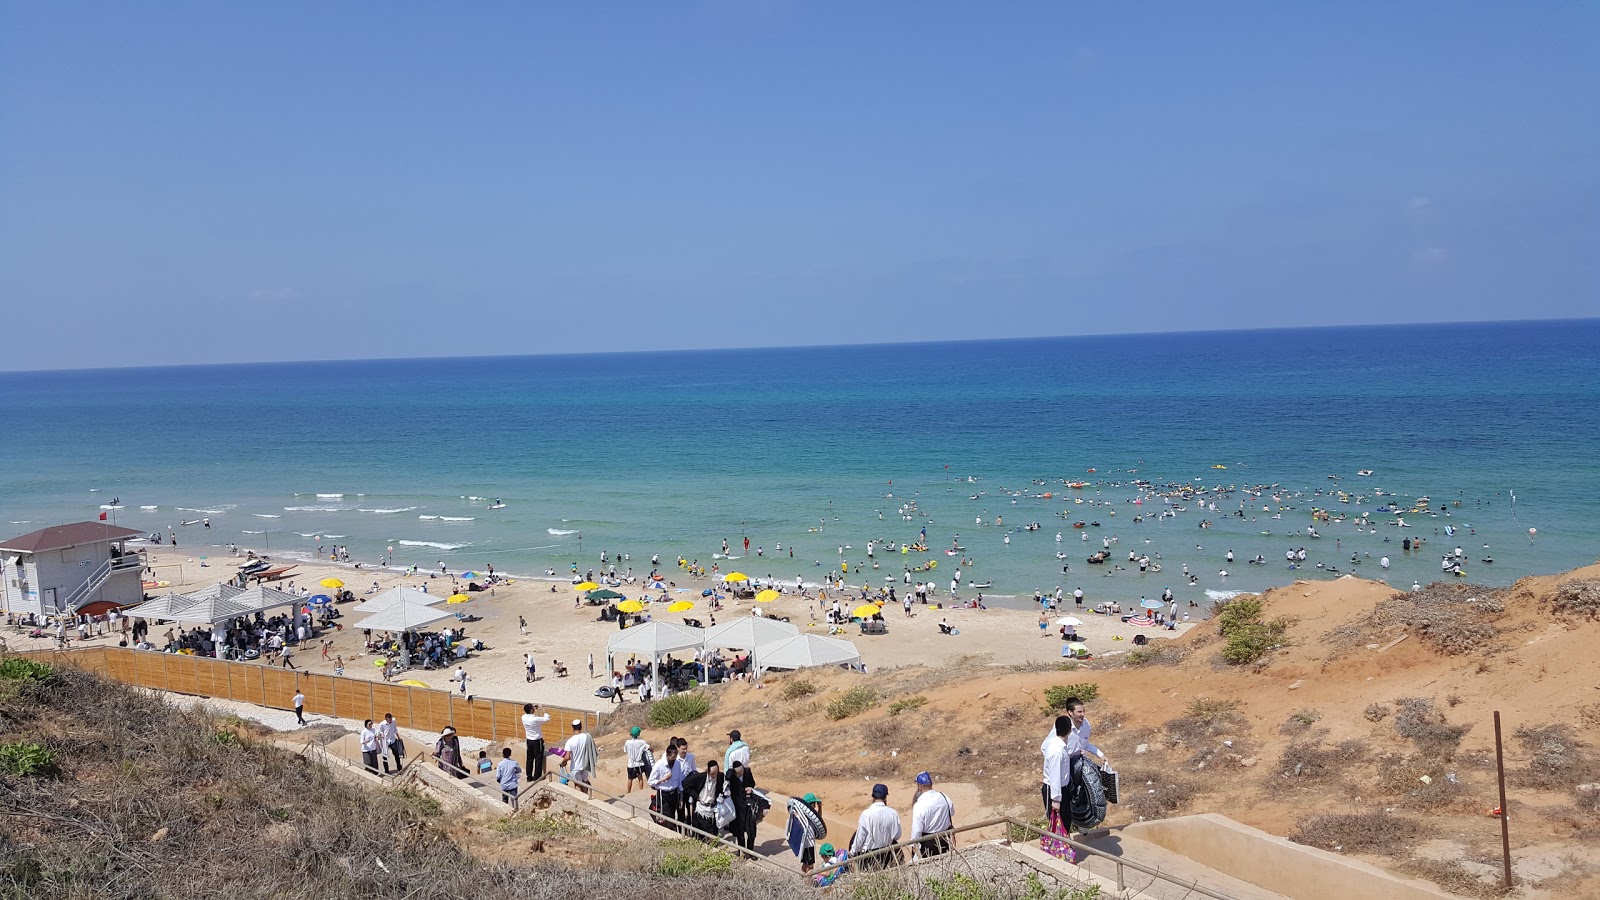 Fotografie cu Kiryat Sanz beach înconjurat de munți